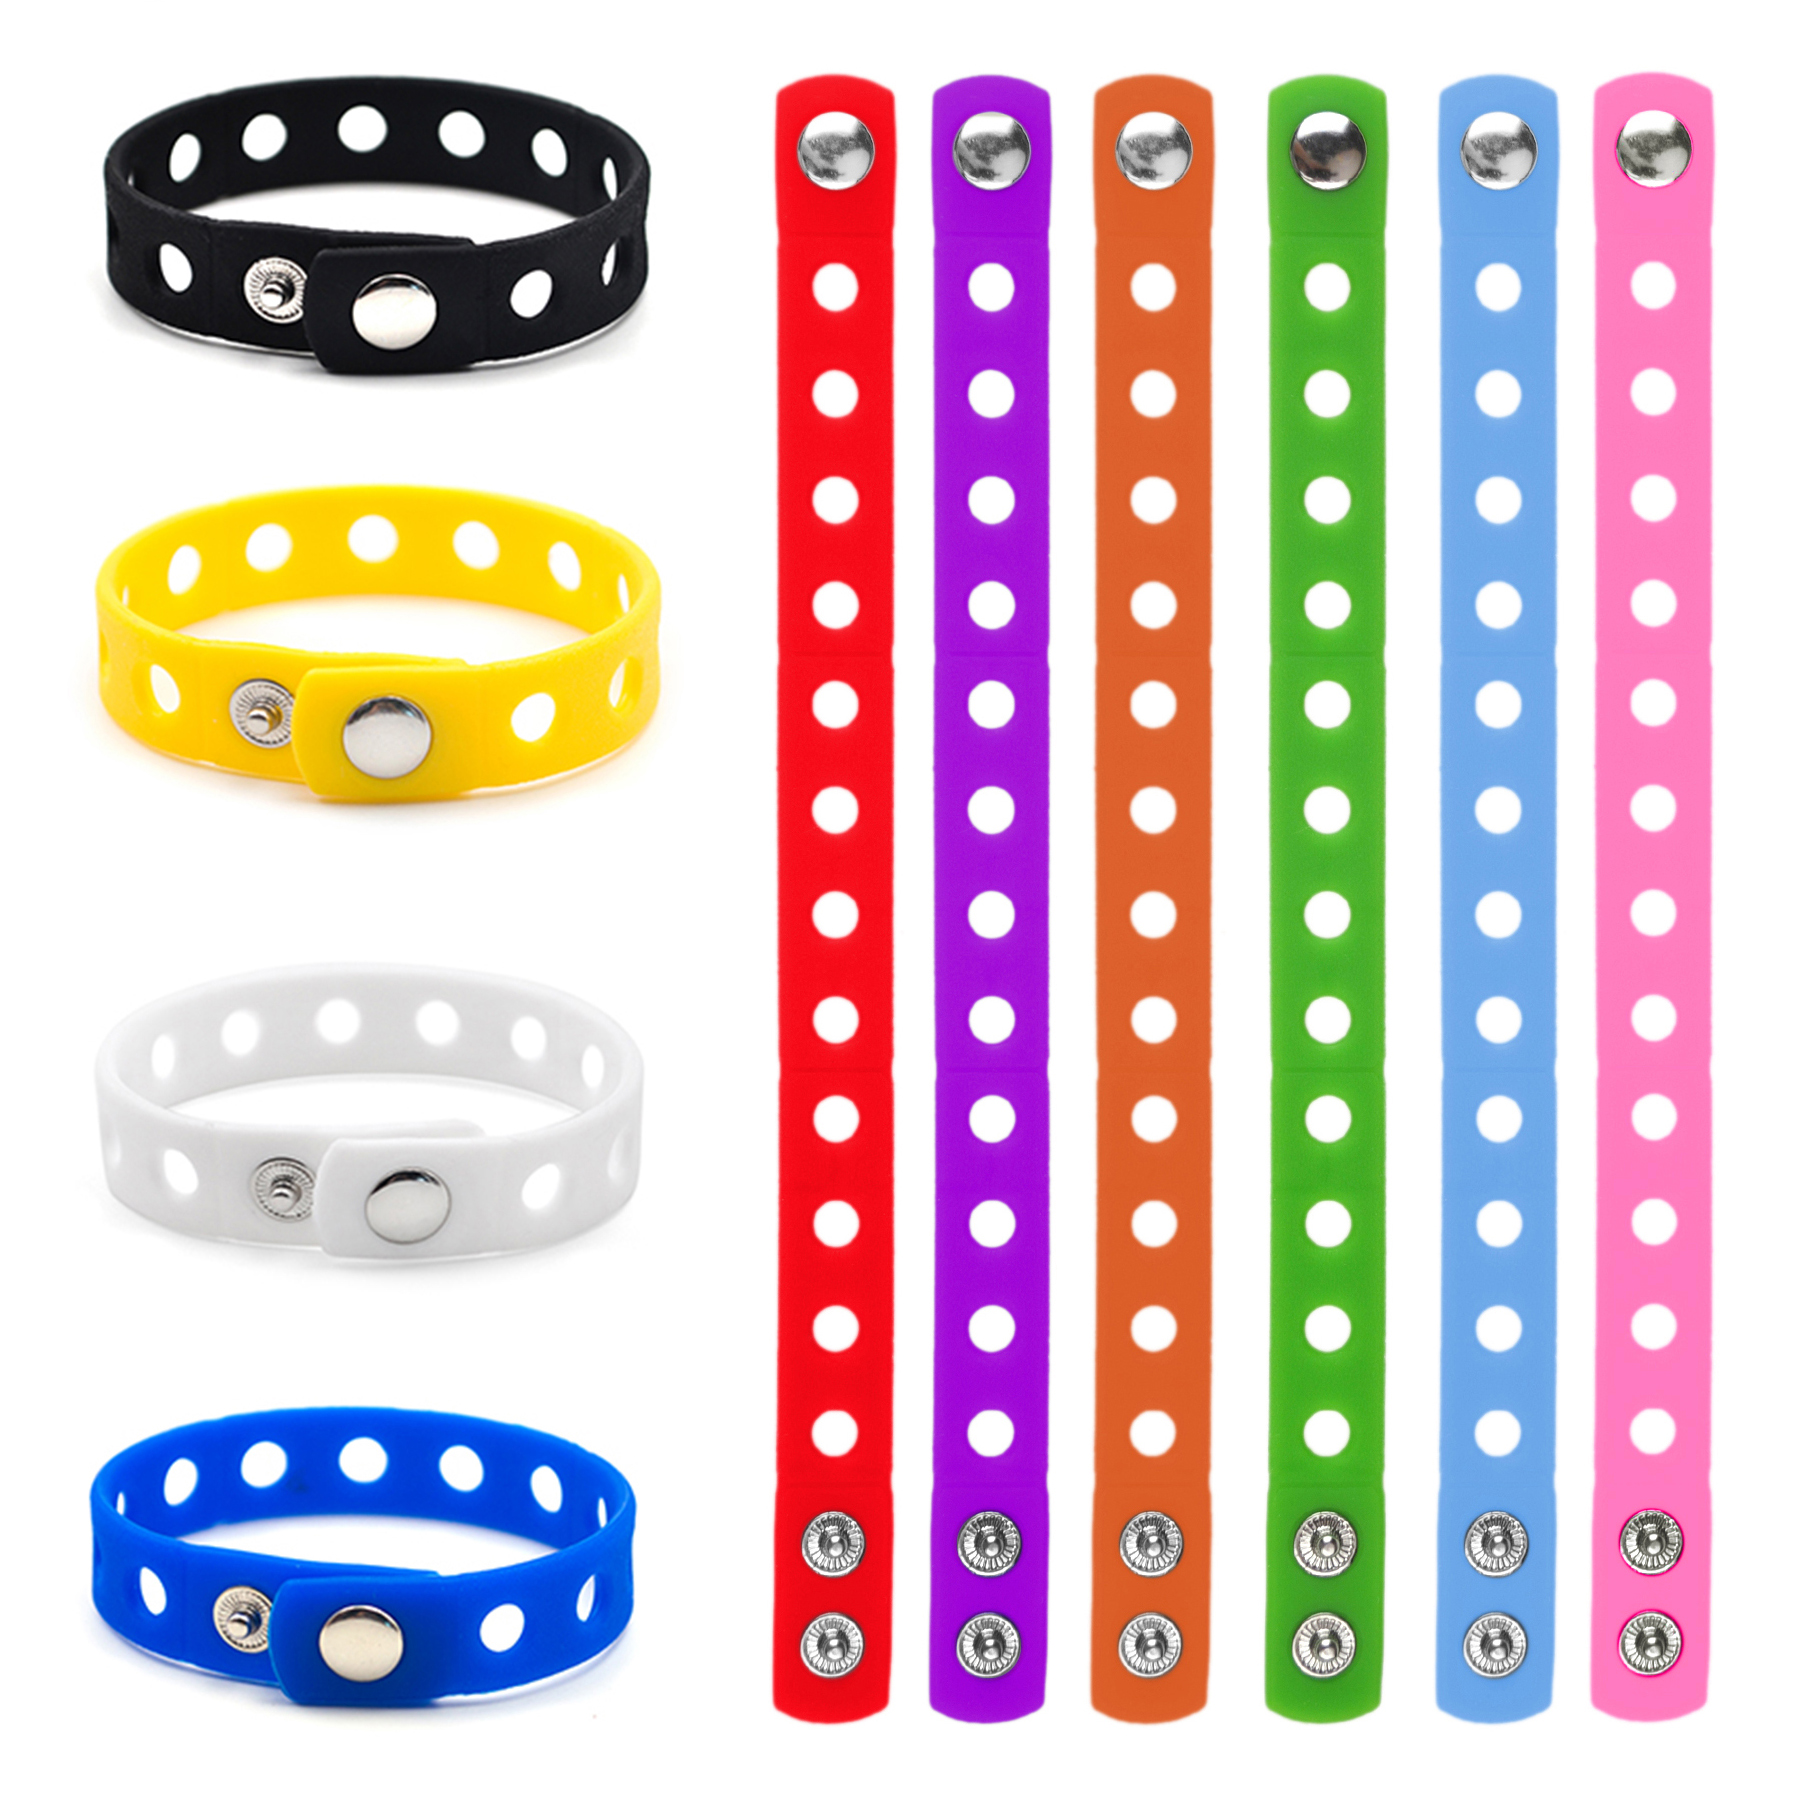 10 Pcs Mixed-Color Silicone Hand Wrist Band Bracelet Children Adult Party Favor